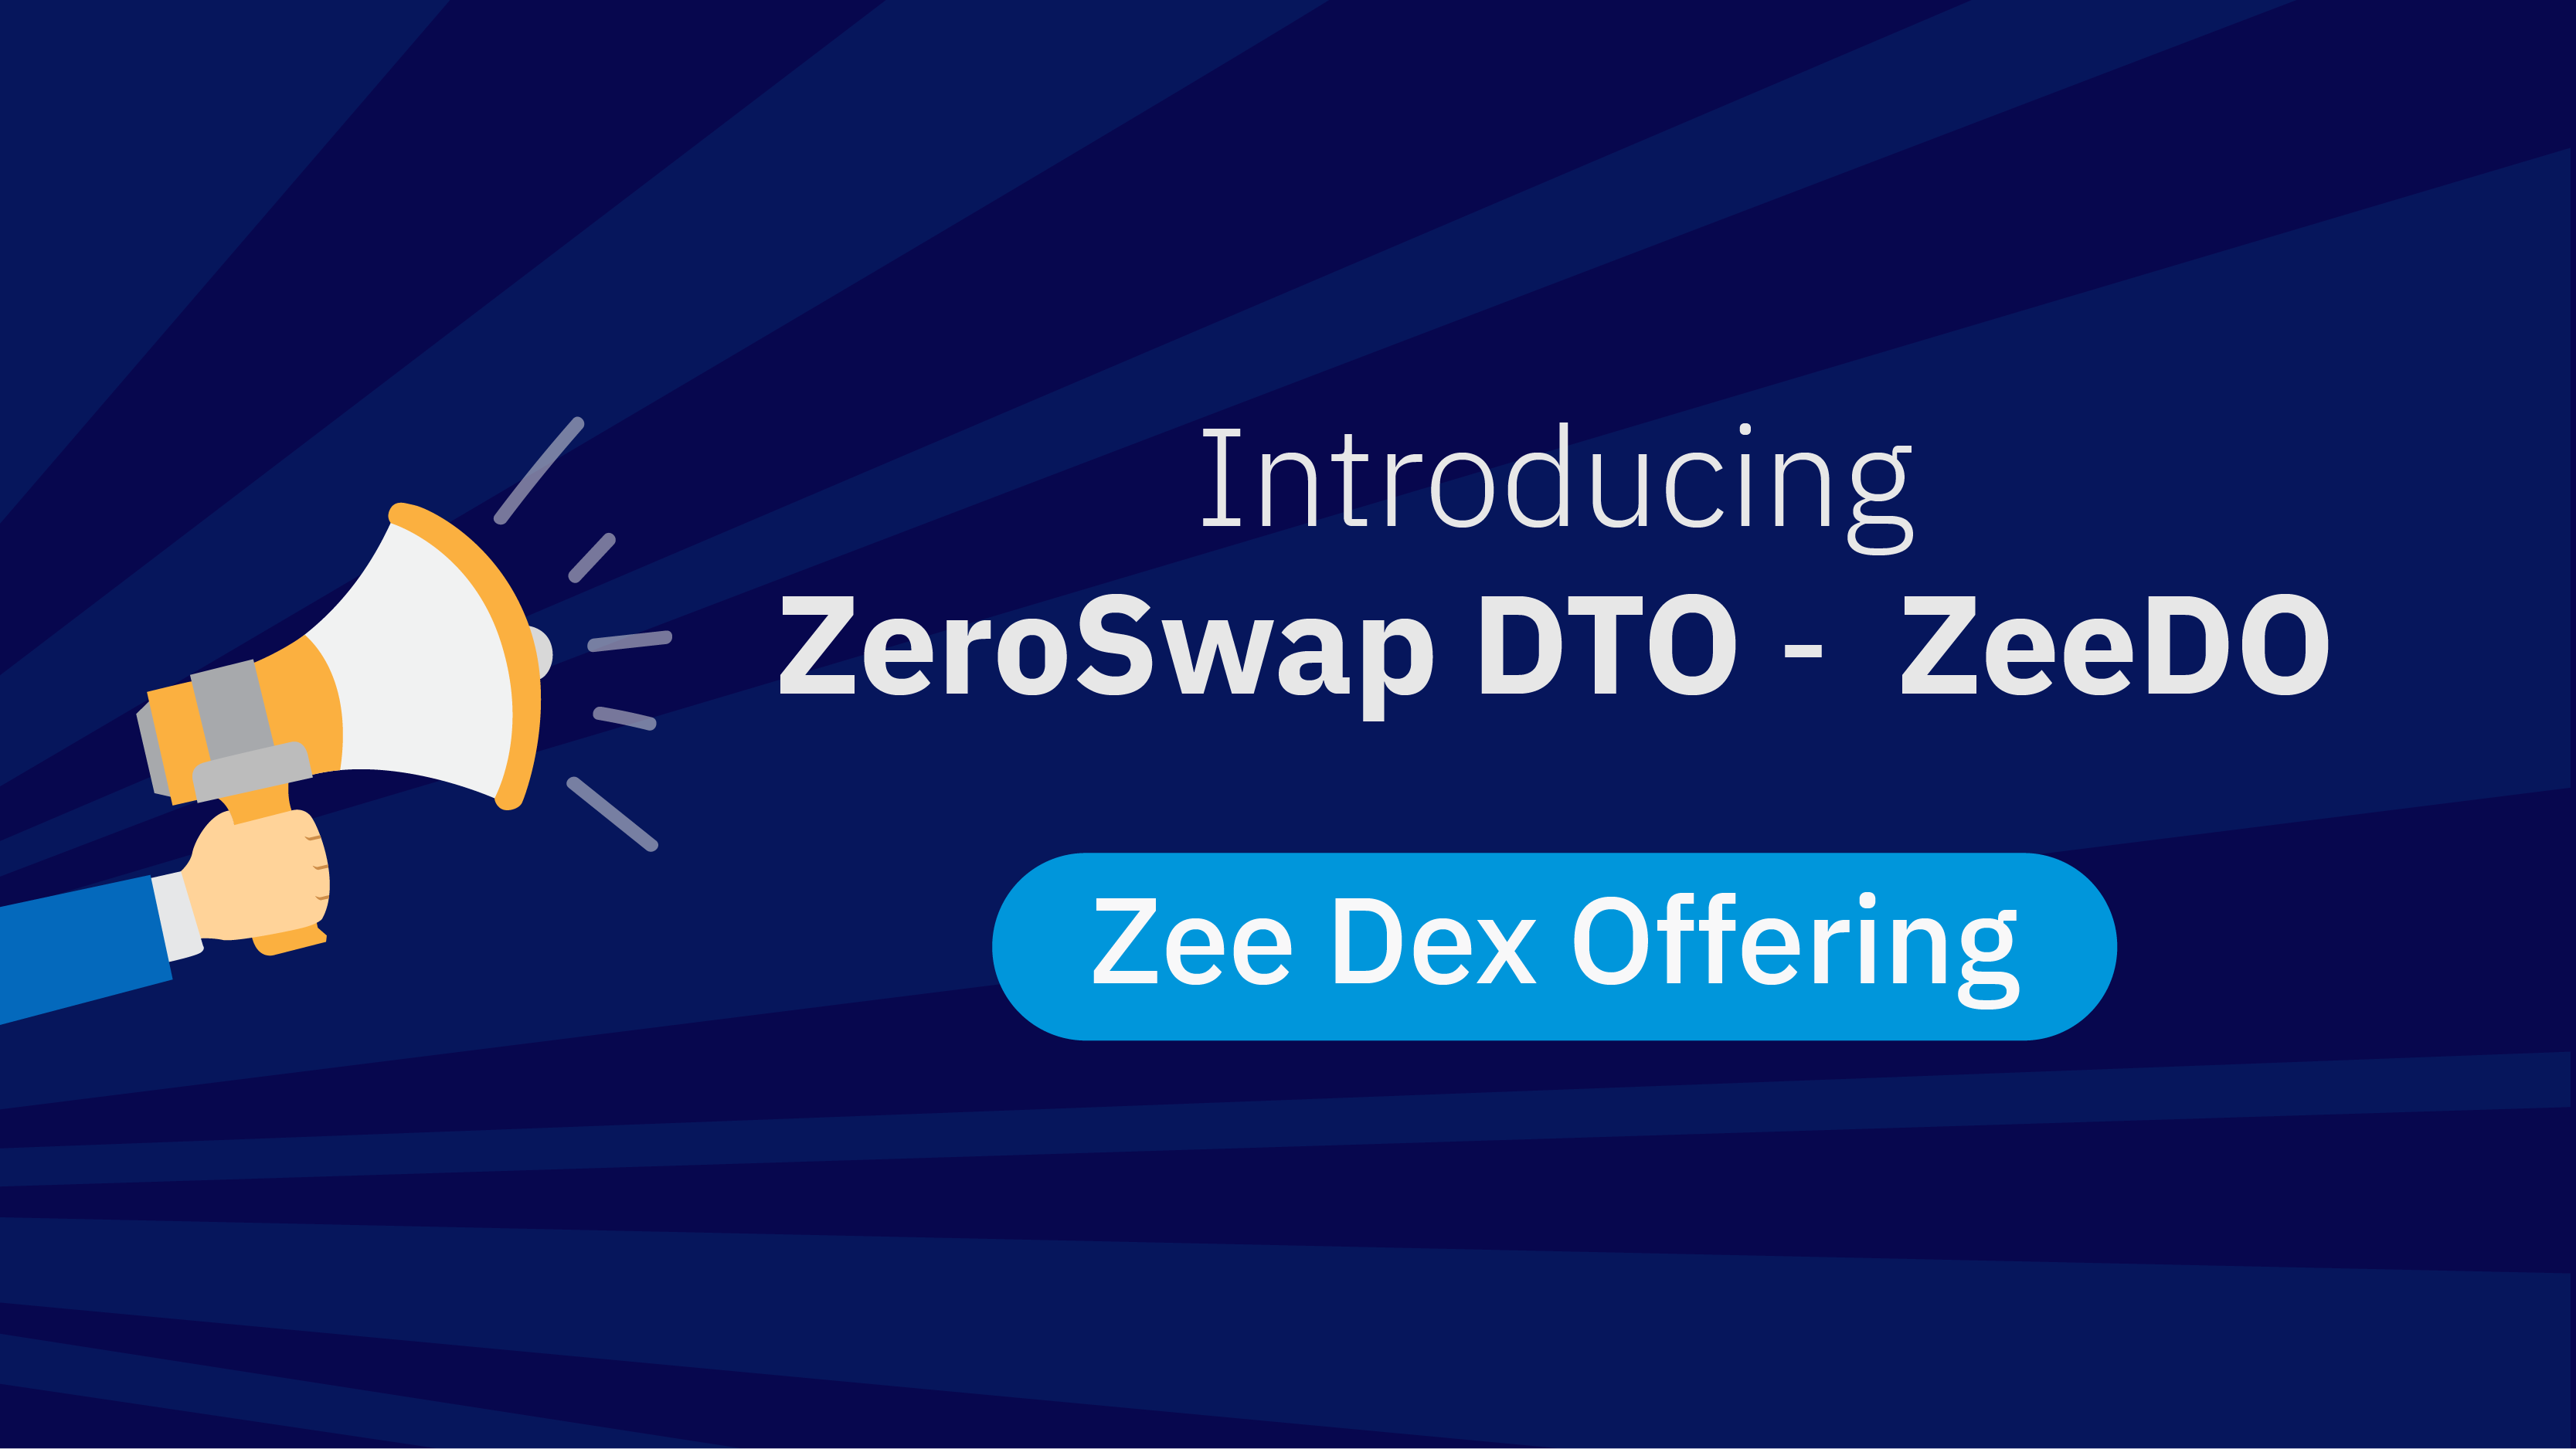 Introducing ZeeDO— ZeroSwap DTO. 100% transparent and fair ...